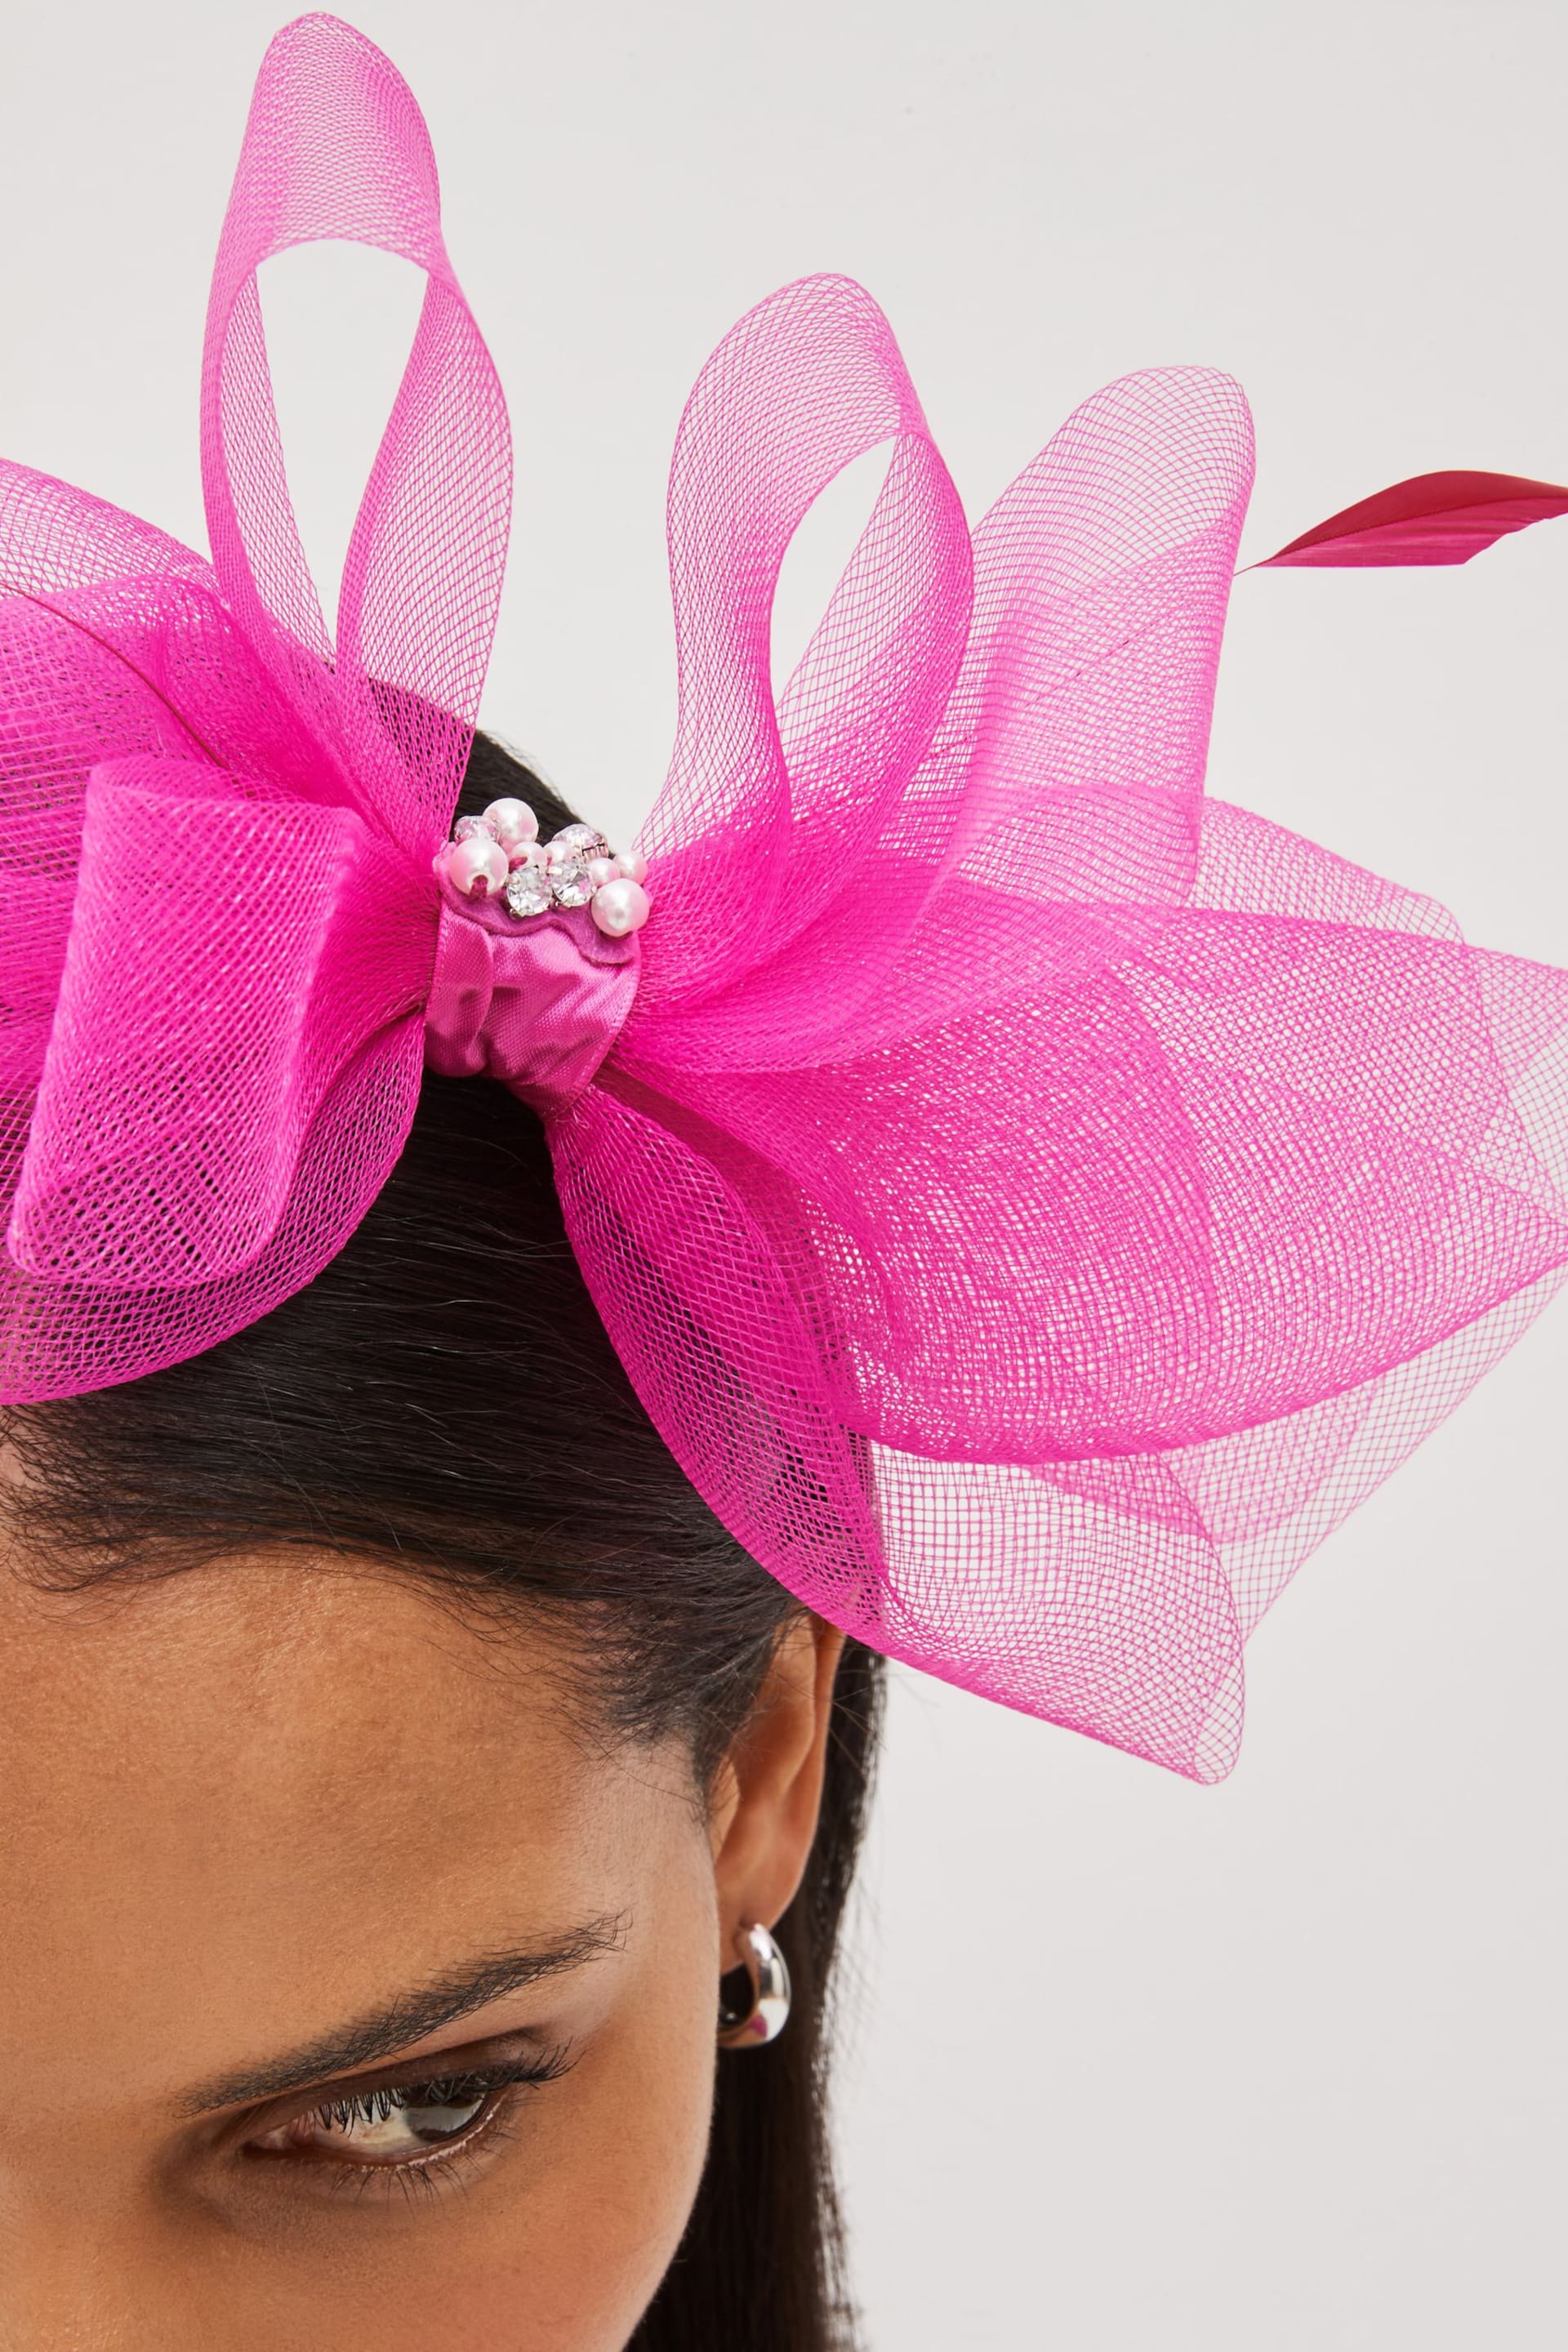 Pink Fascinator Headband - Image 2 of 3